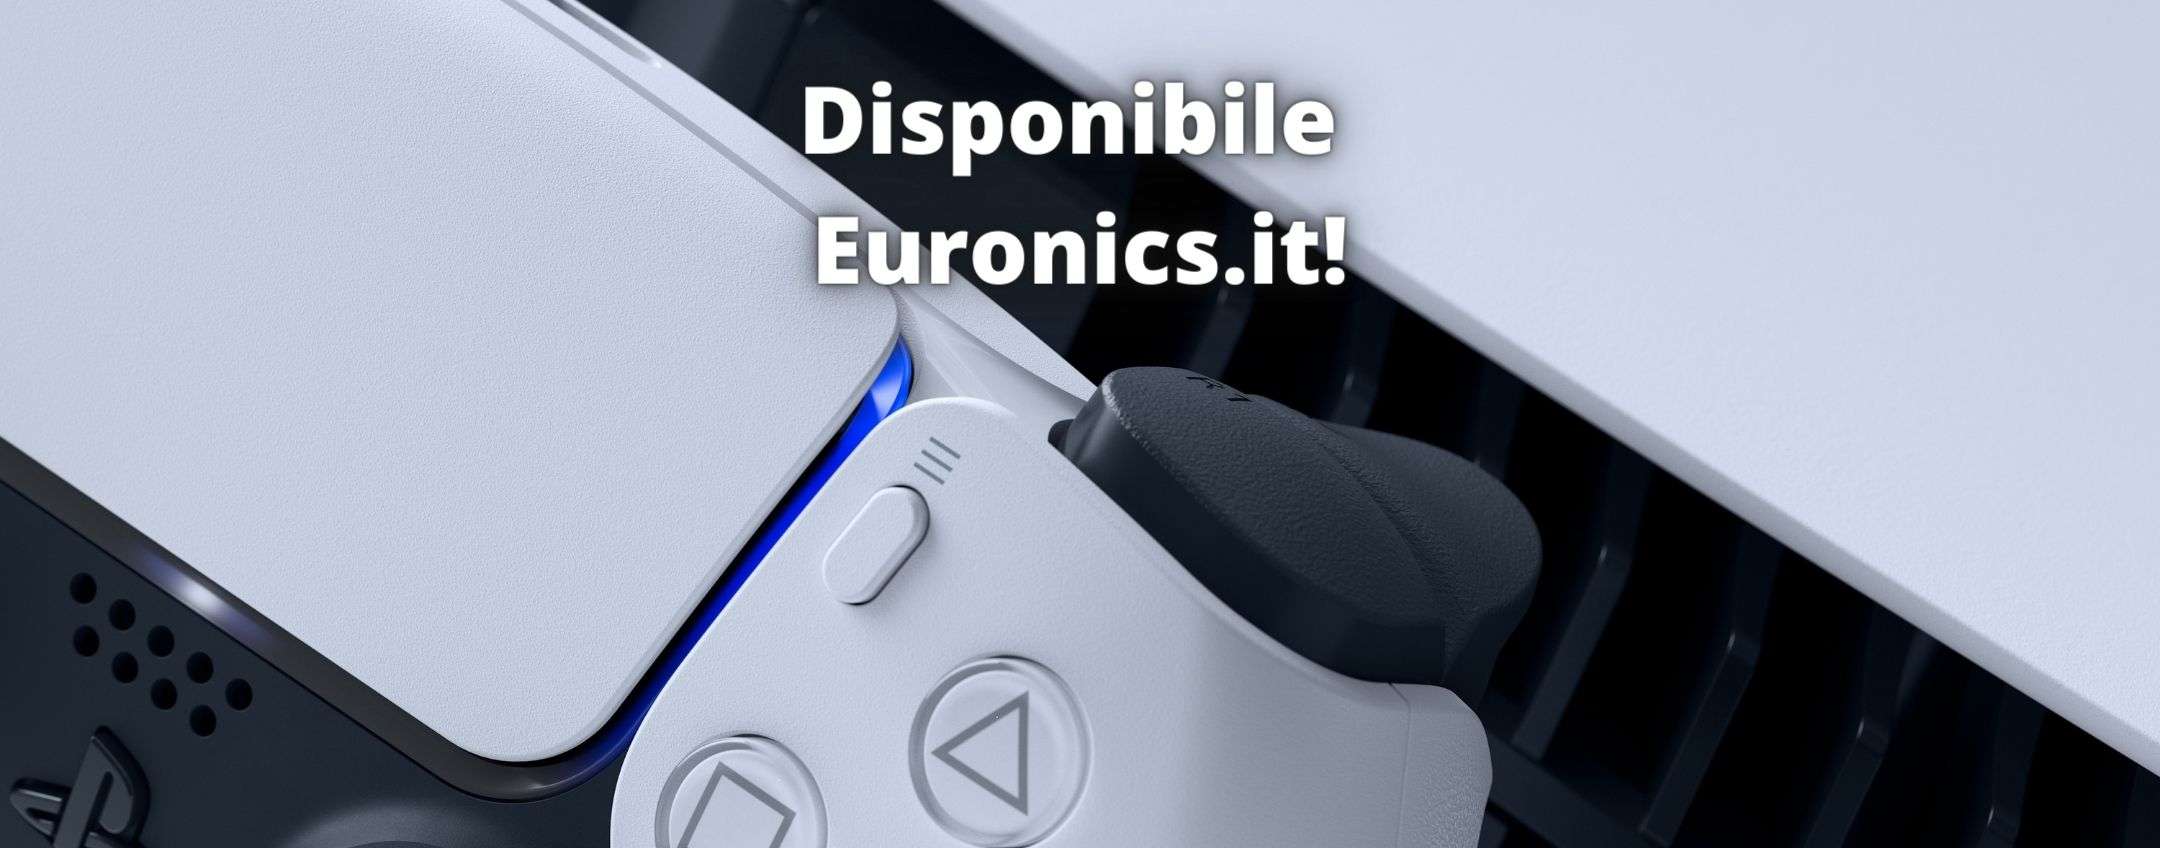 PS5 disponibile Euronics